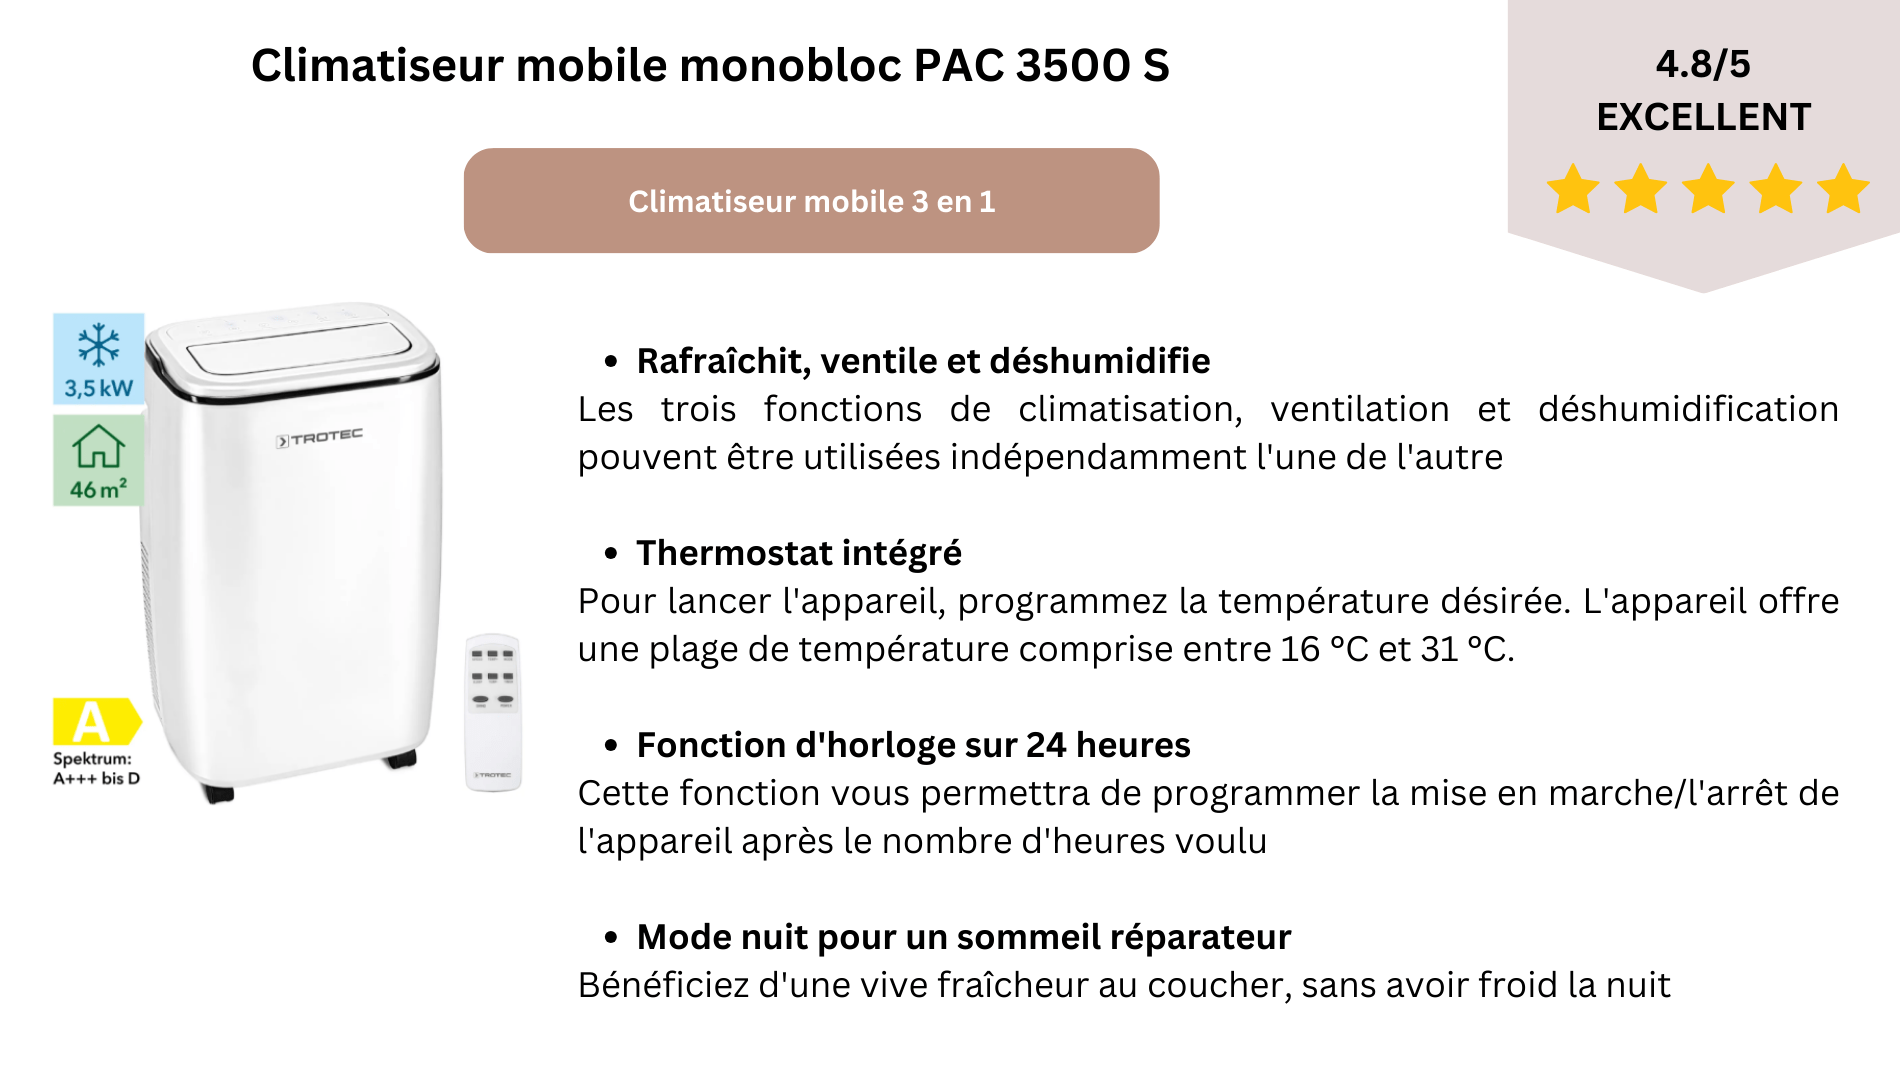 Climatiseur local monobloc PAC 3500 S